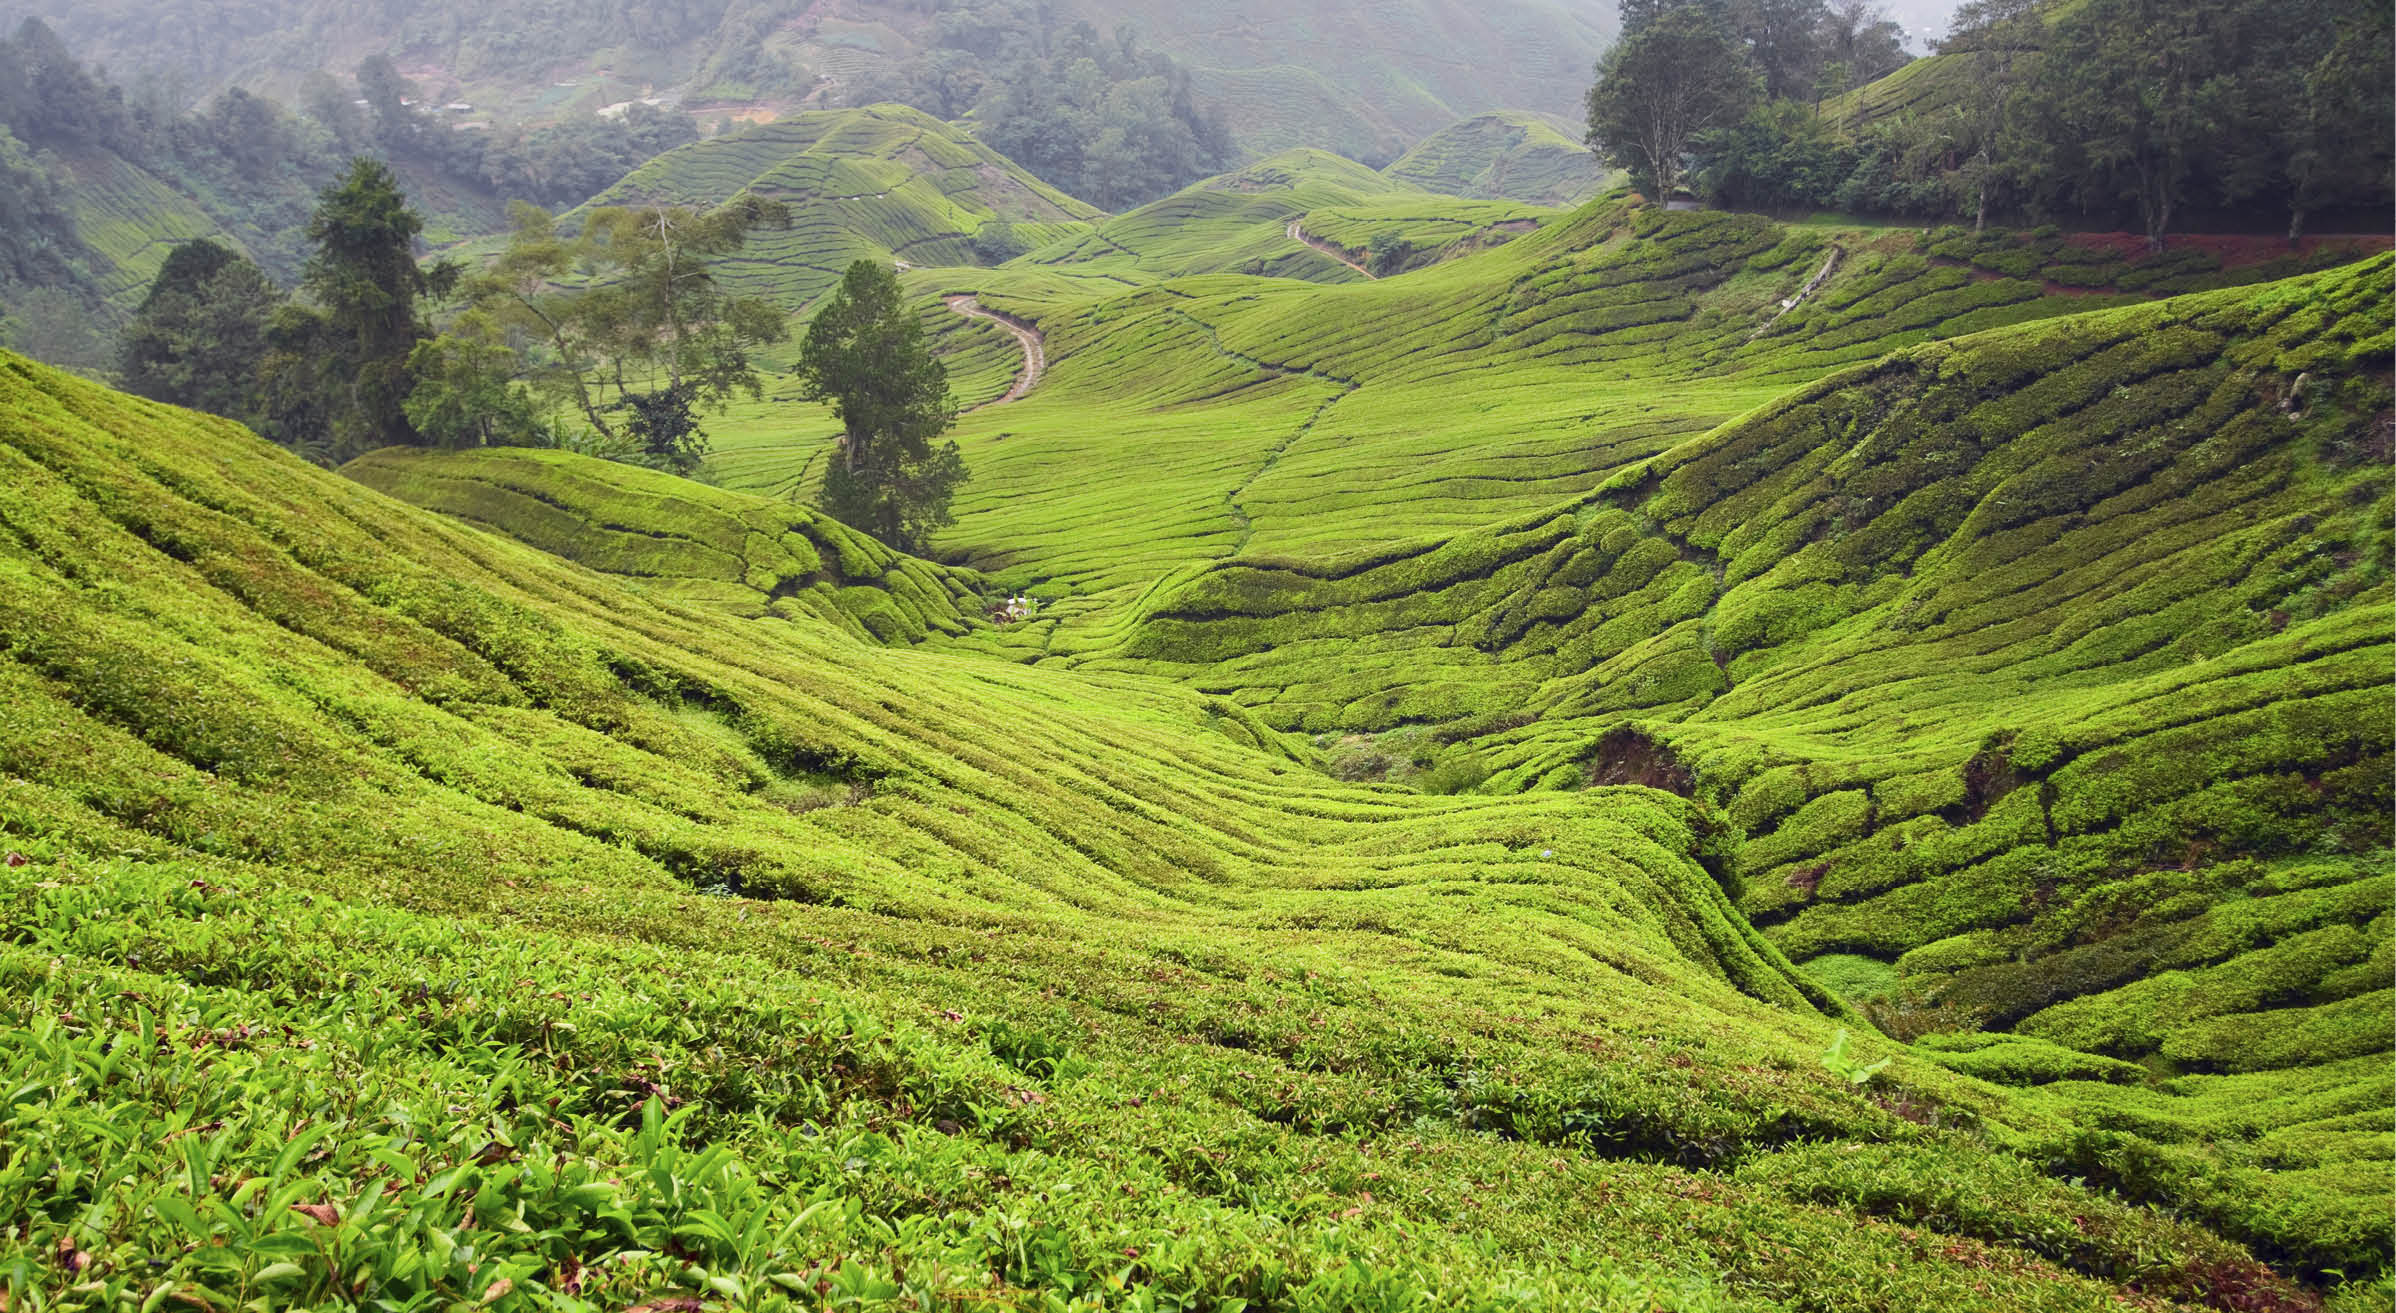 Greenery of tea plantation Sungei Palas seen from higher altitude around Gunung Brinchang in Cameron Highlands, Malaysia.